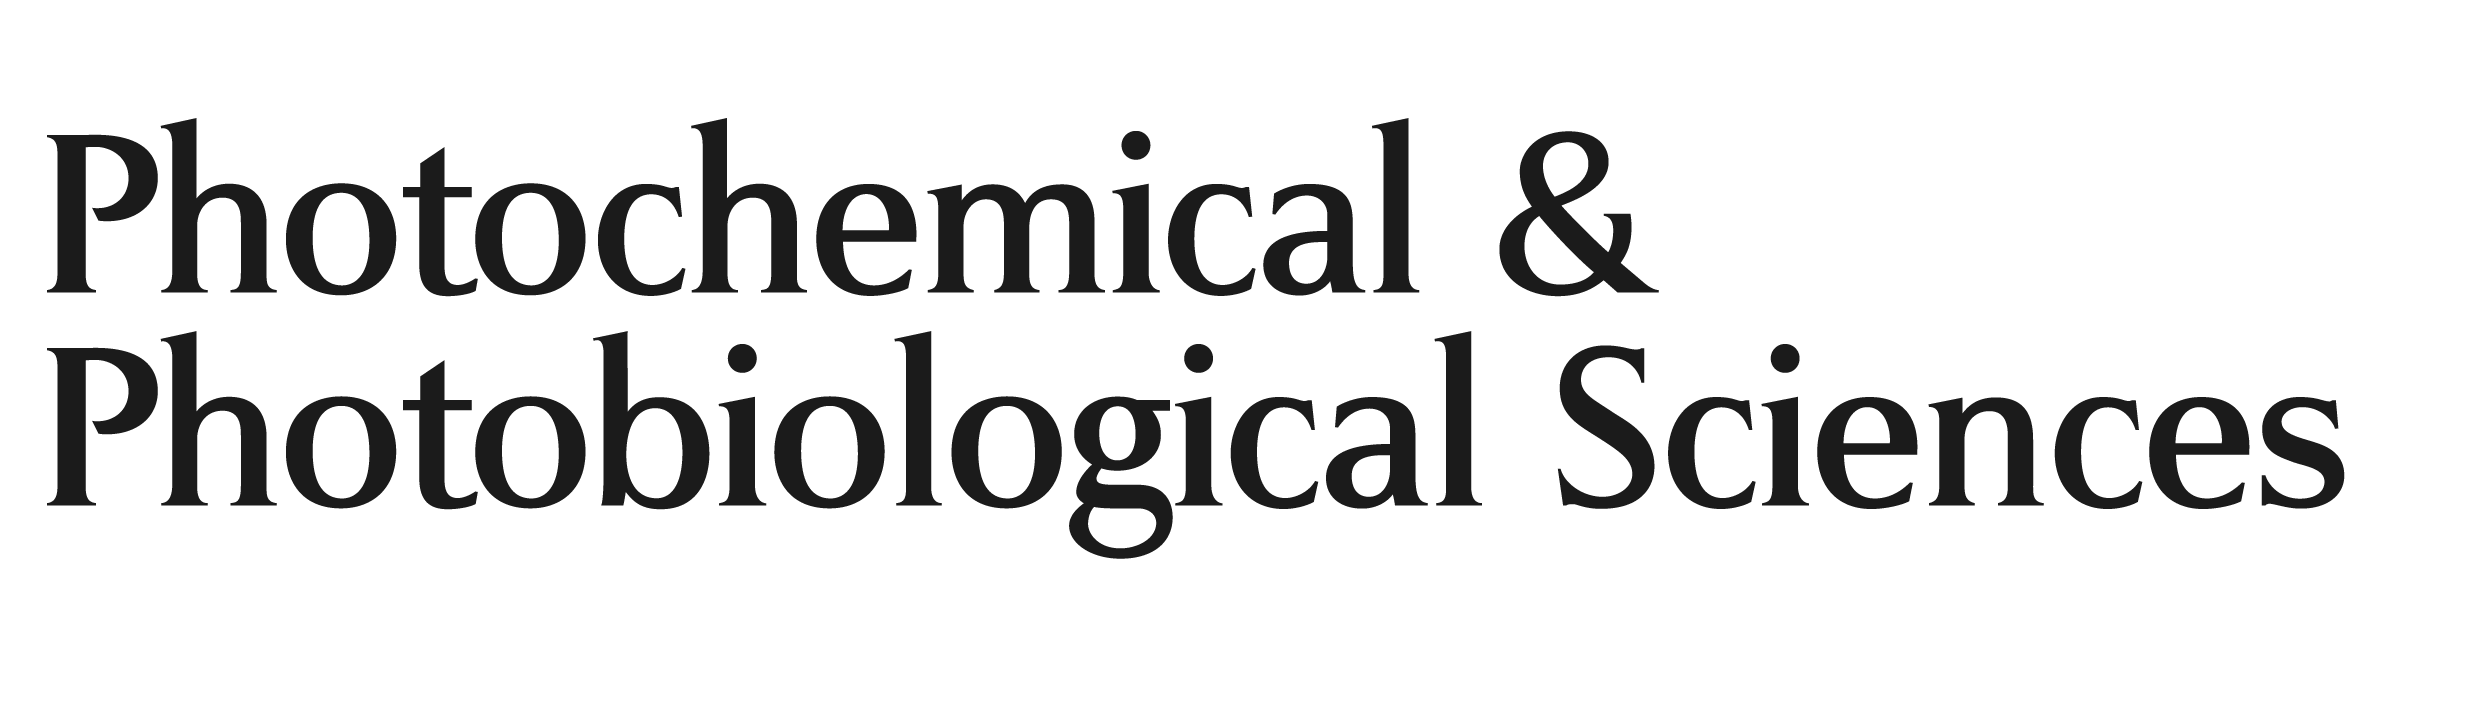 Photochemical & Photobiological Sciences logo